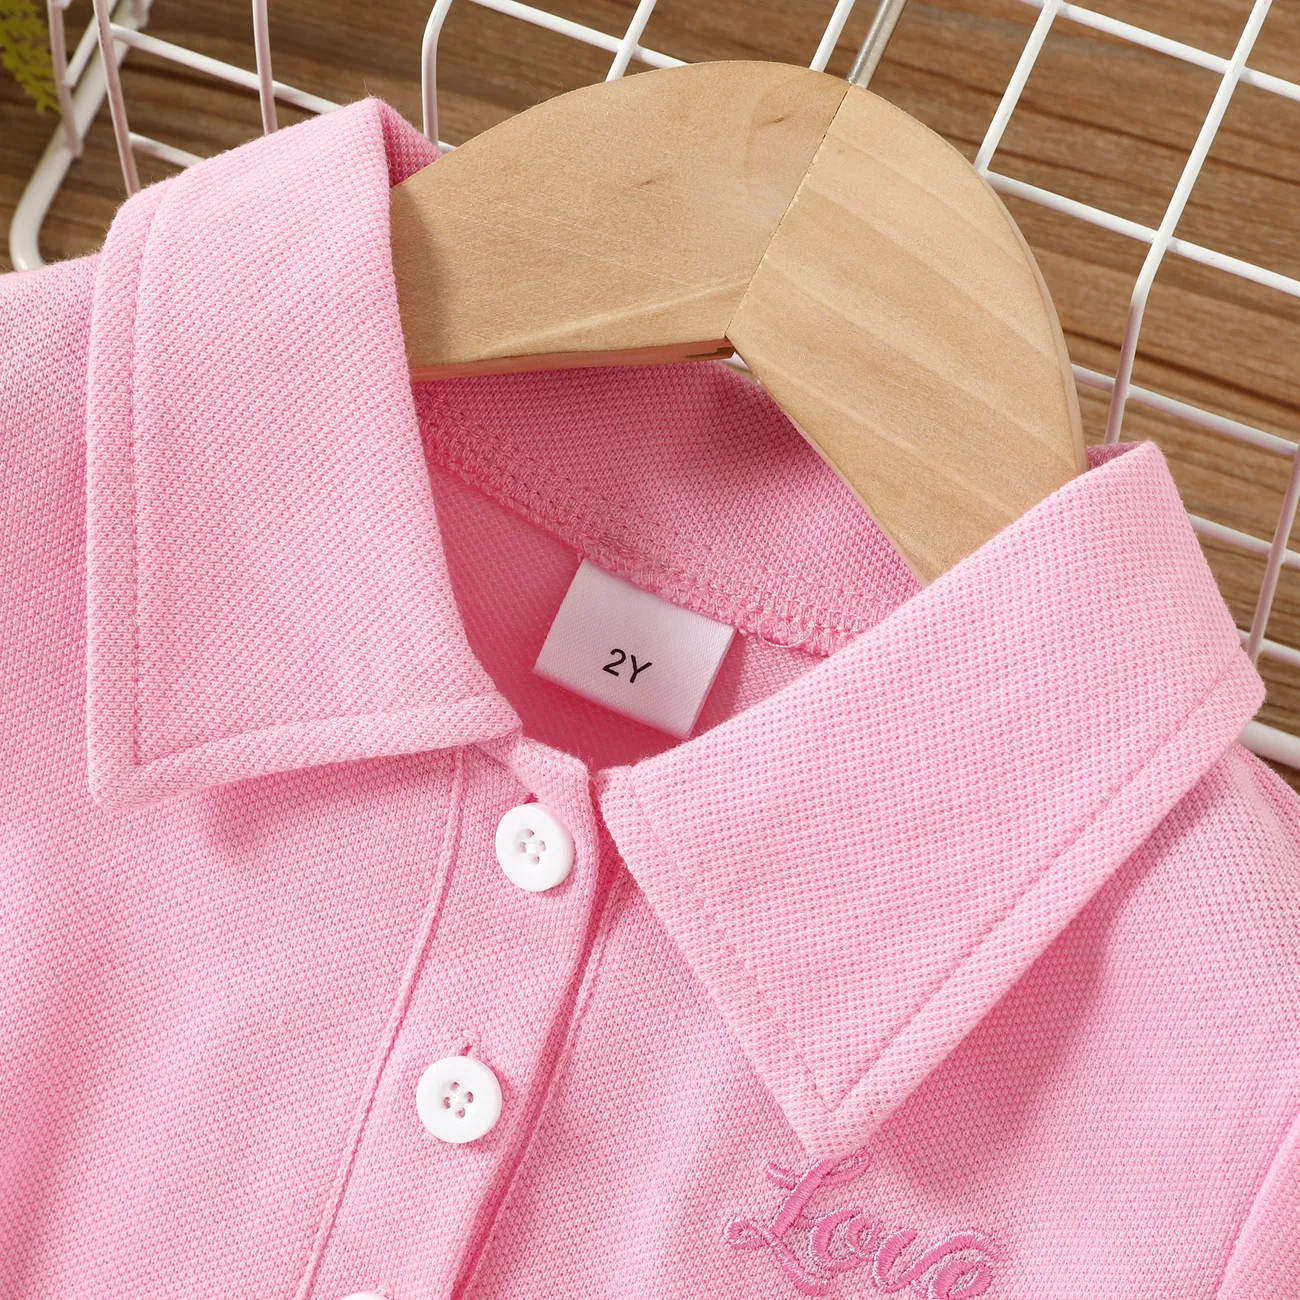 Toddler Girl's  Solid Color Short Sleeve Shirt Collar Dress Pink big image 1